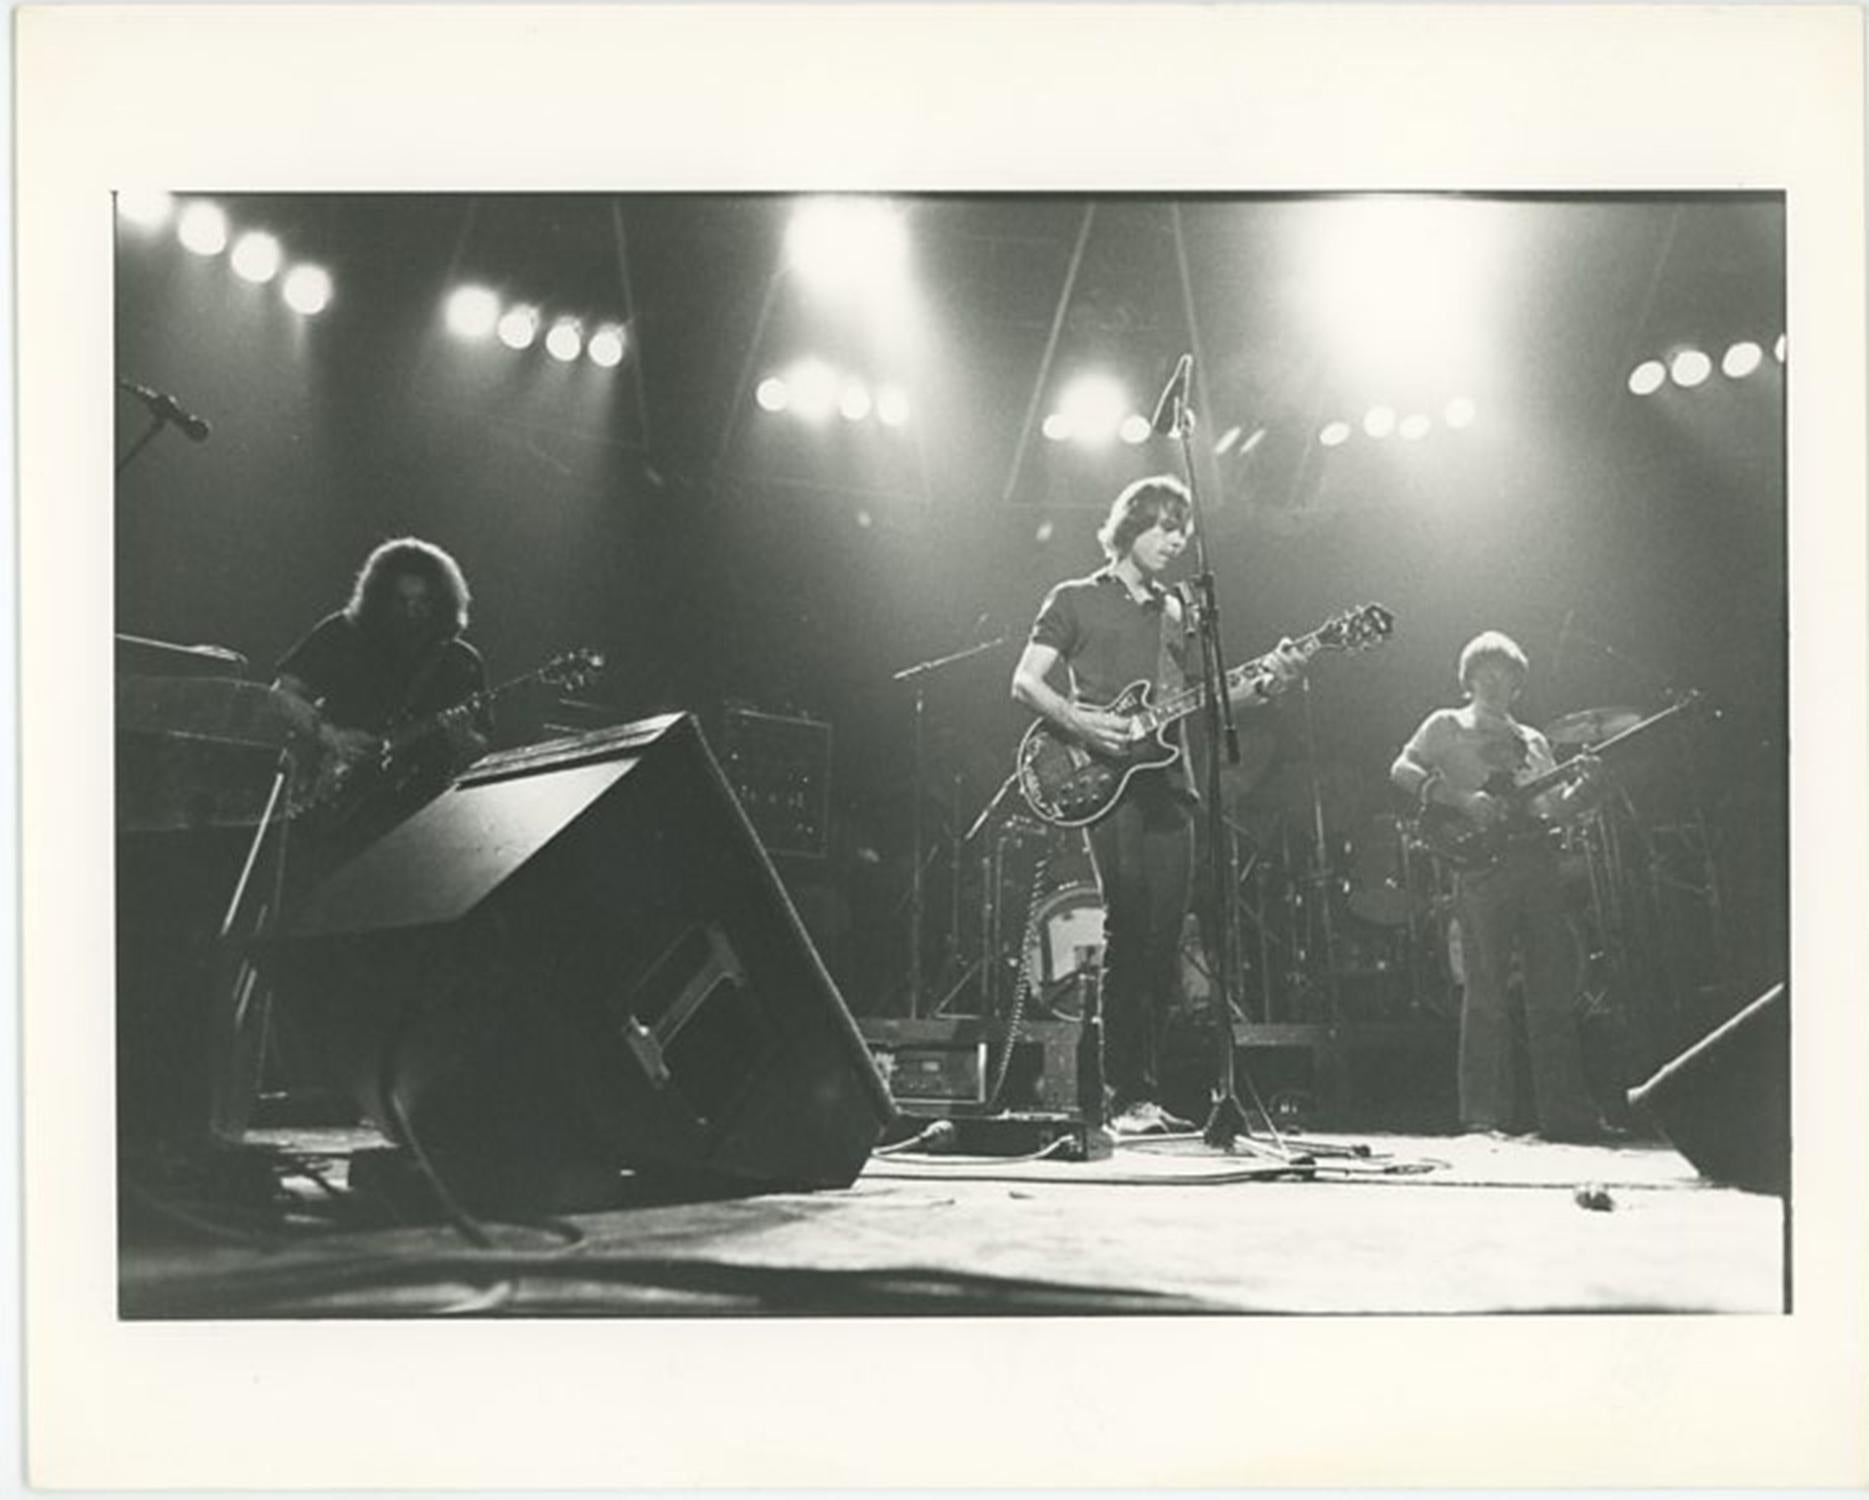 Michael Putland Black and White Photograph - The Grateful Dead in Concert - Egypt 1978